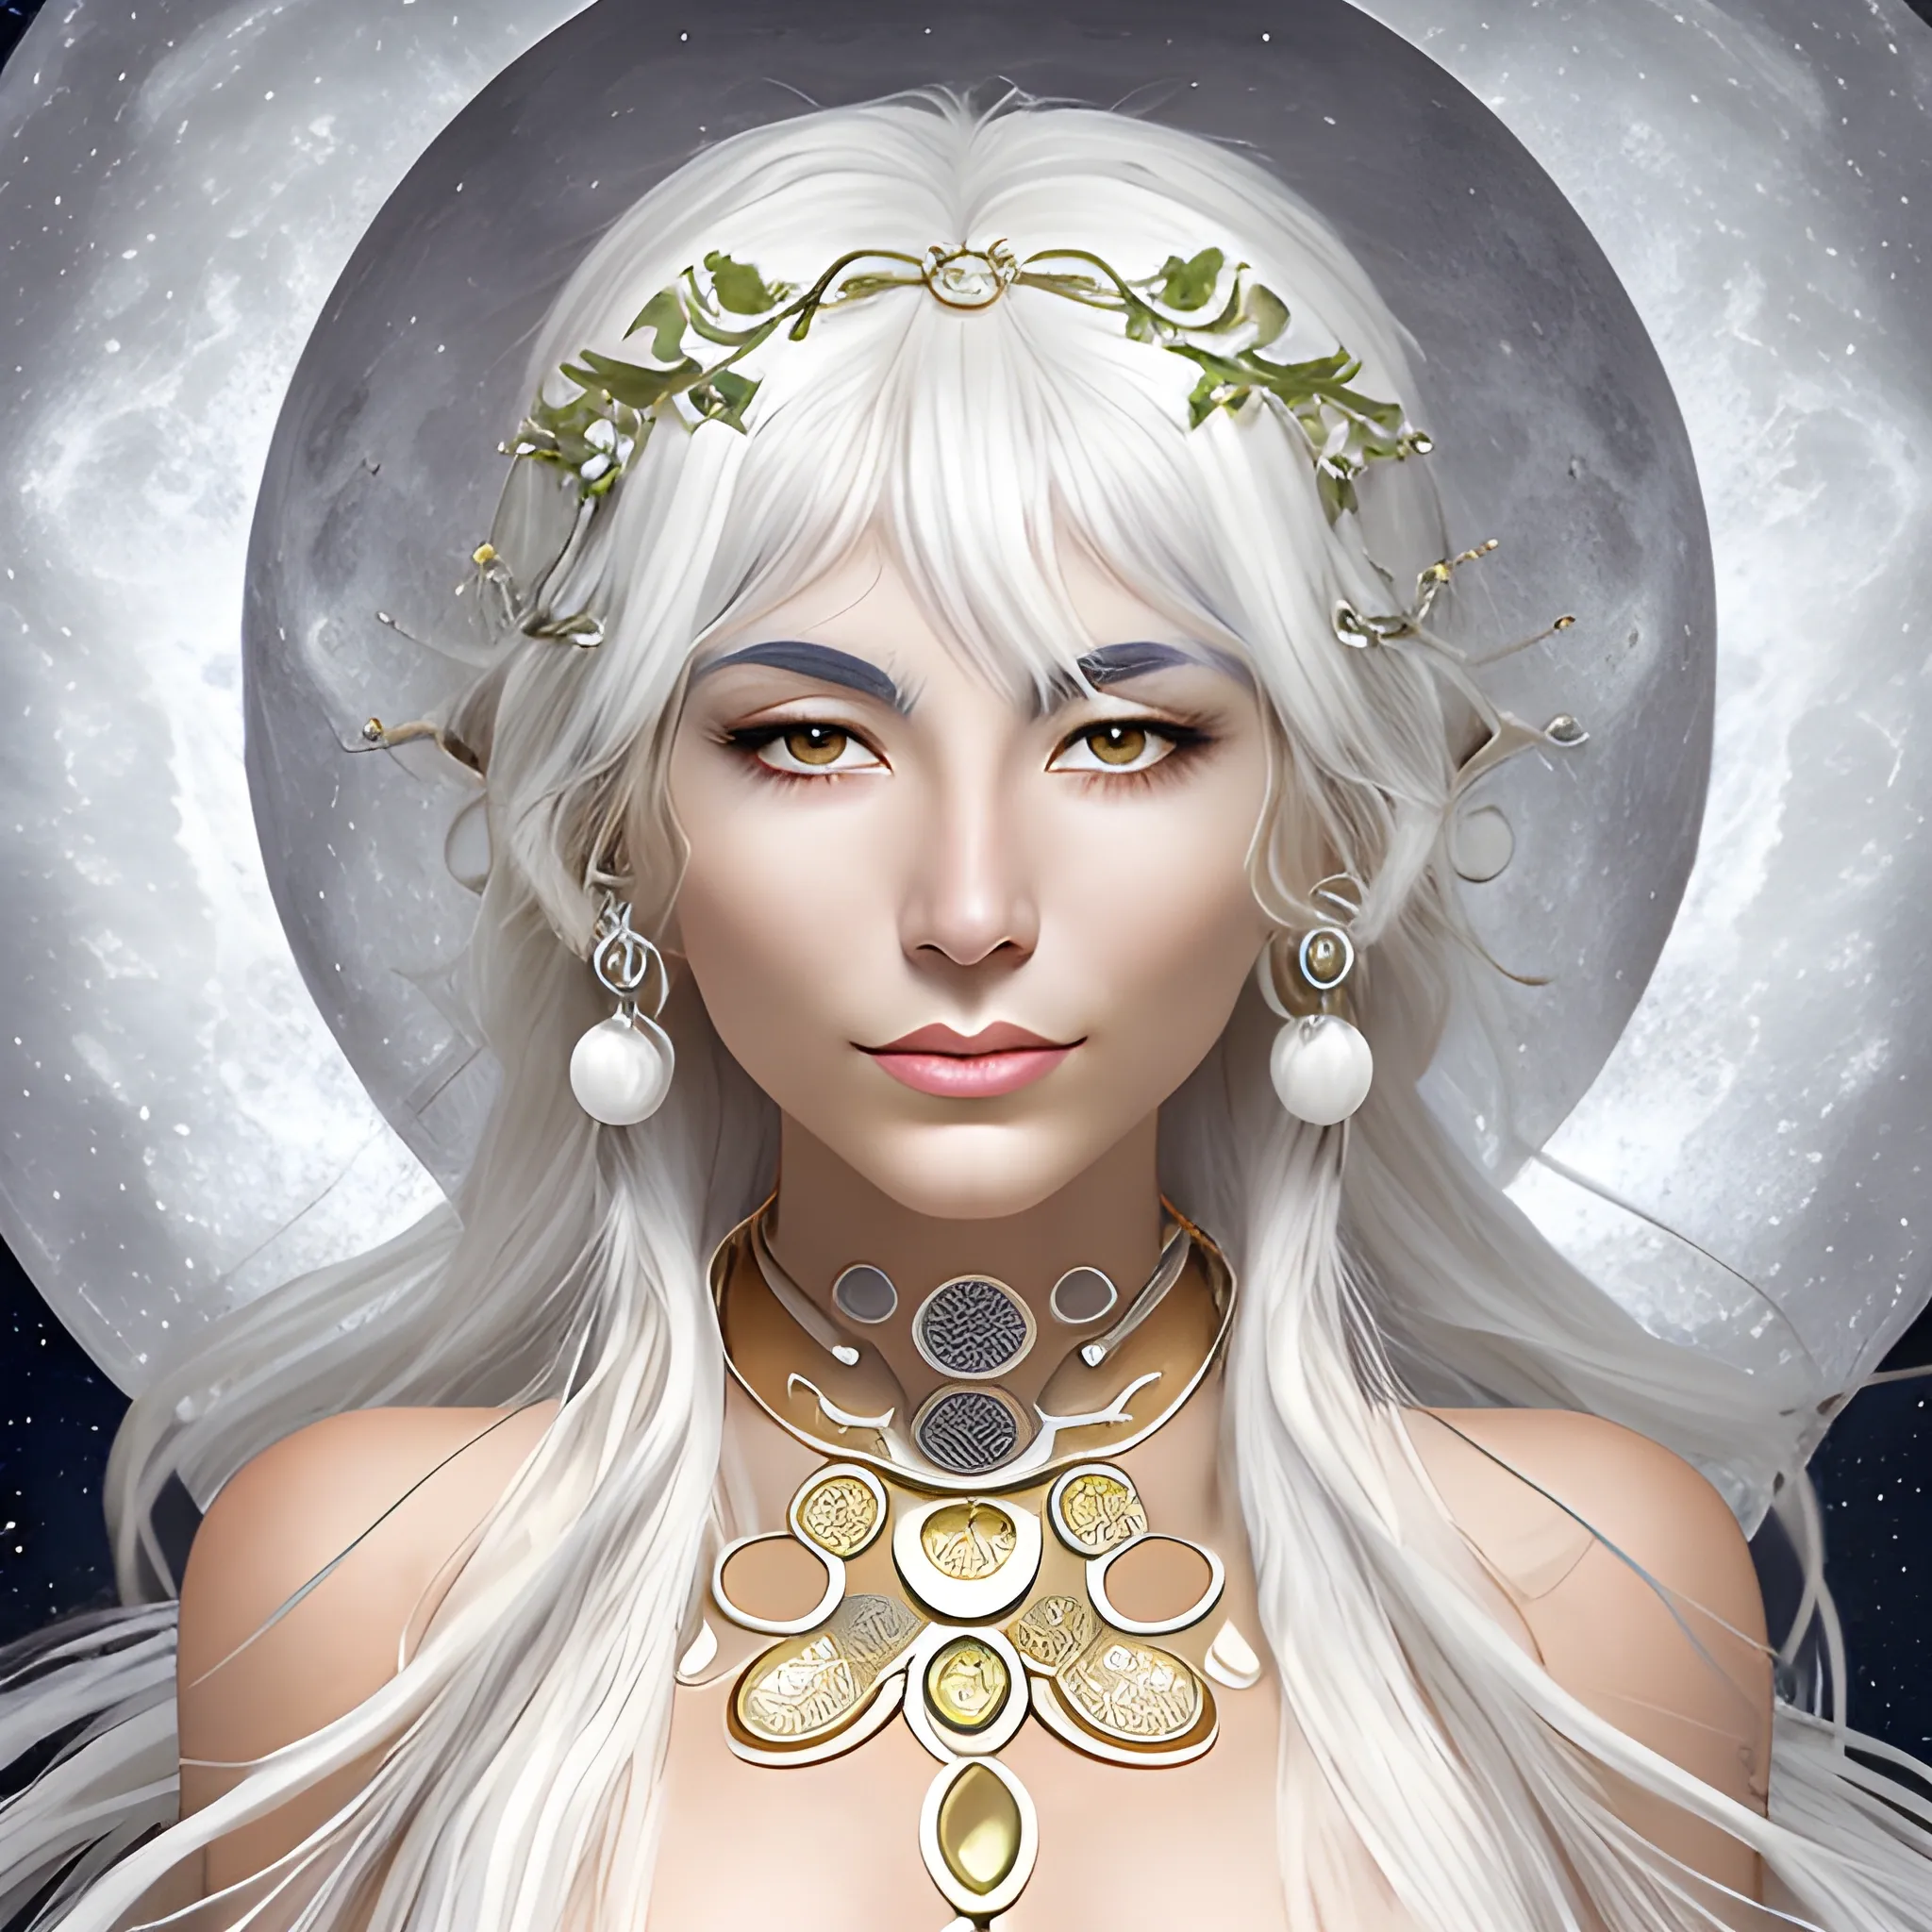  moon goddess, with olive skin, white hair